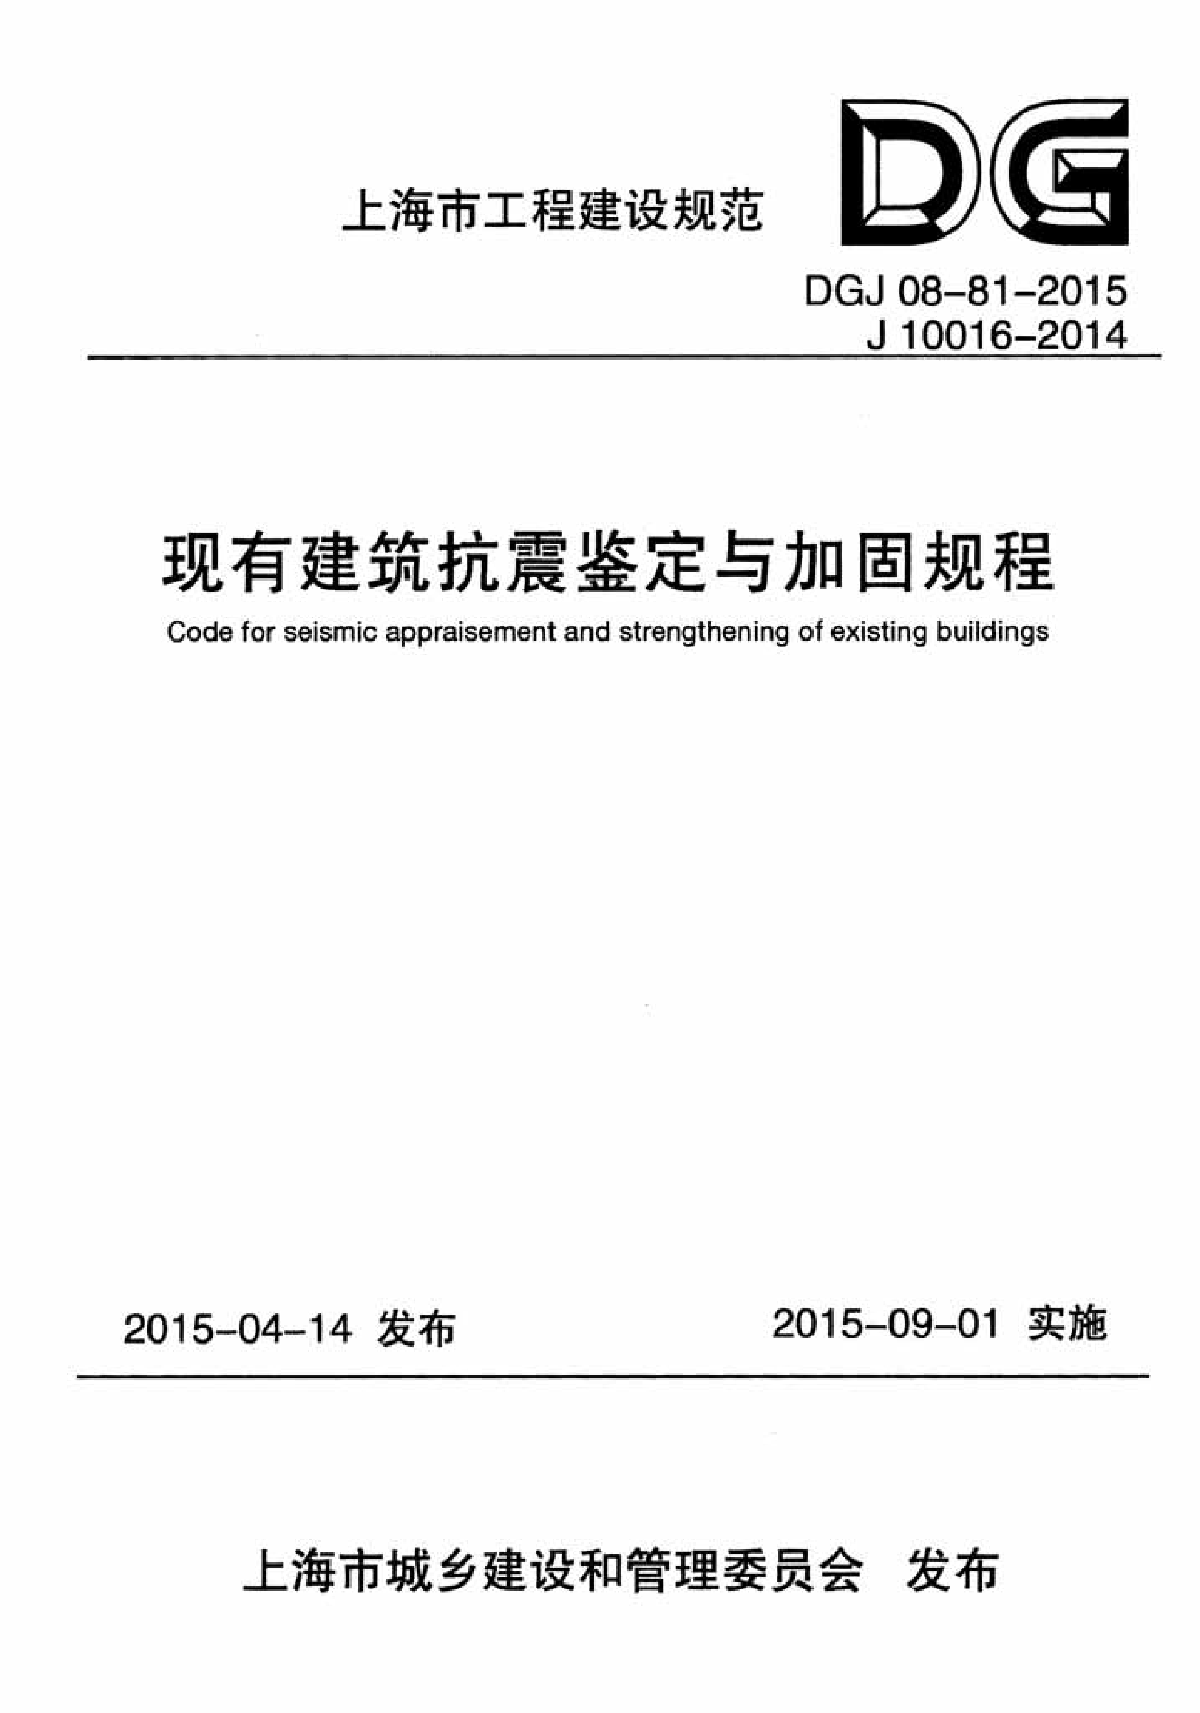 DGJ08-81-2015现有建筑抗震鉴定与加固规程